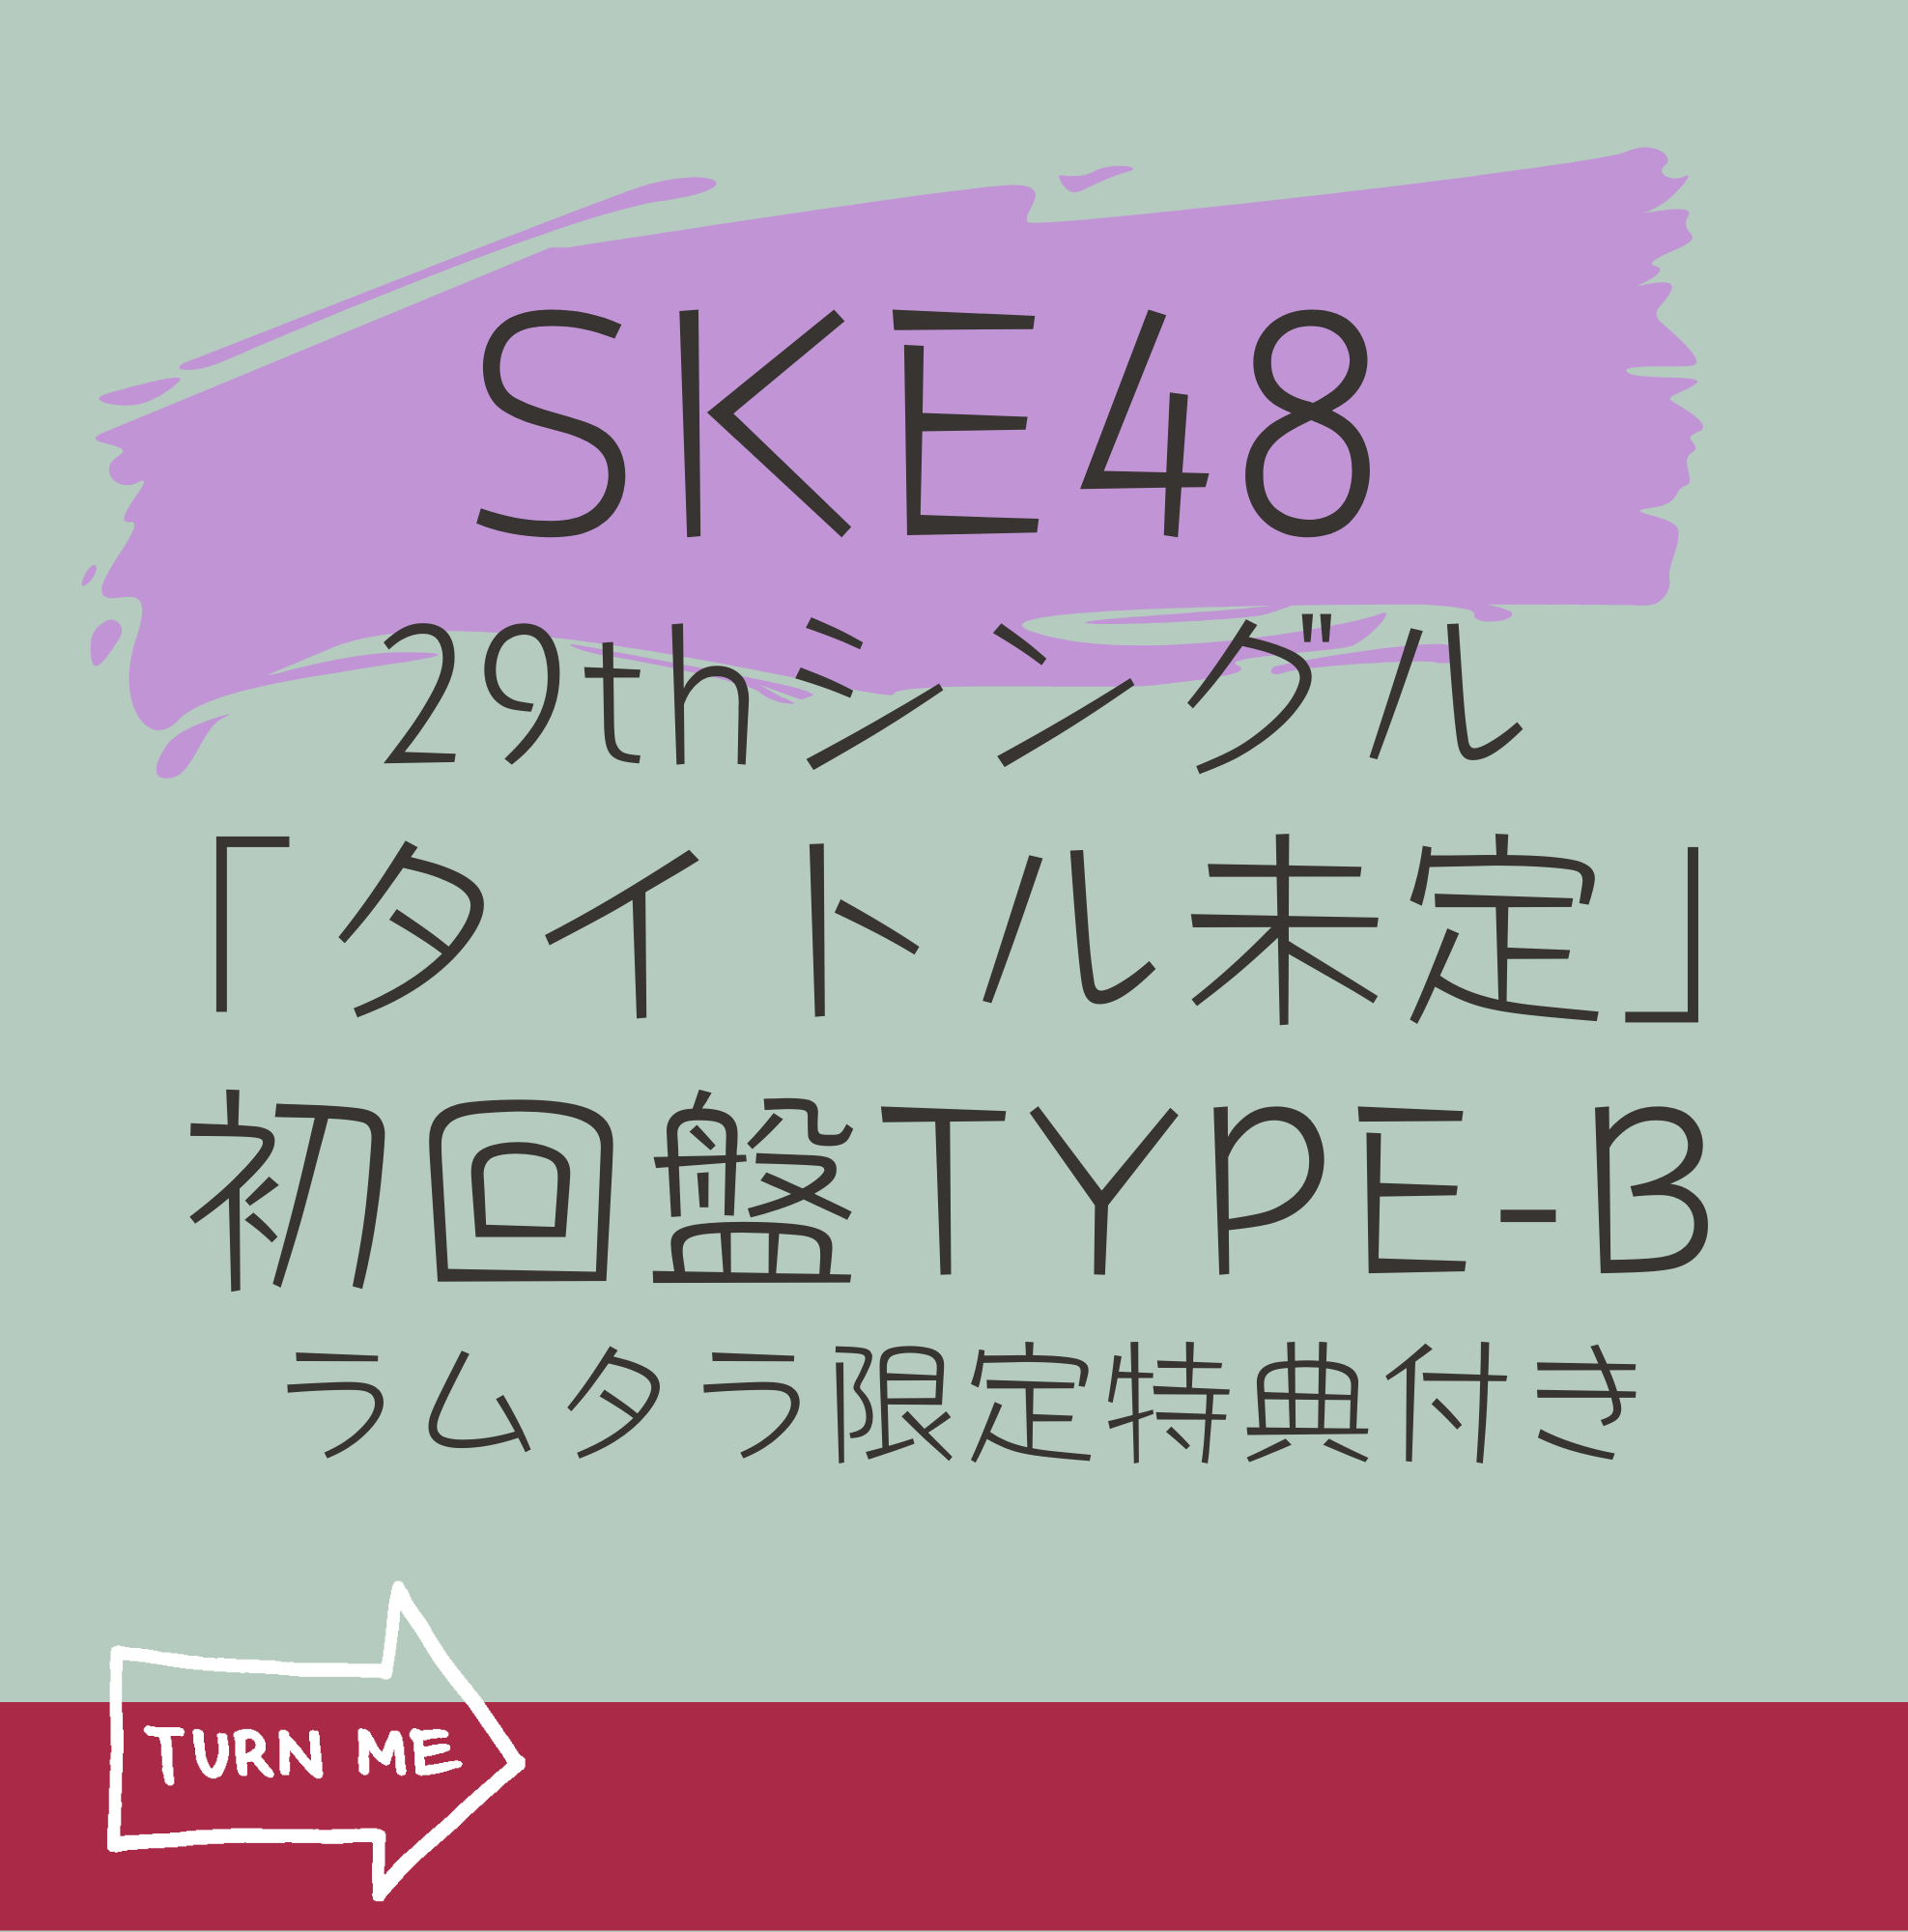 SKE48  29thシングル「タイトル未定」(CD+DVD)【初回限定盤 TYPE-B】 ラムタラ限定特典付き